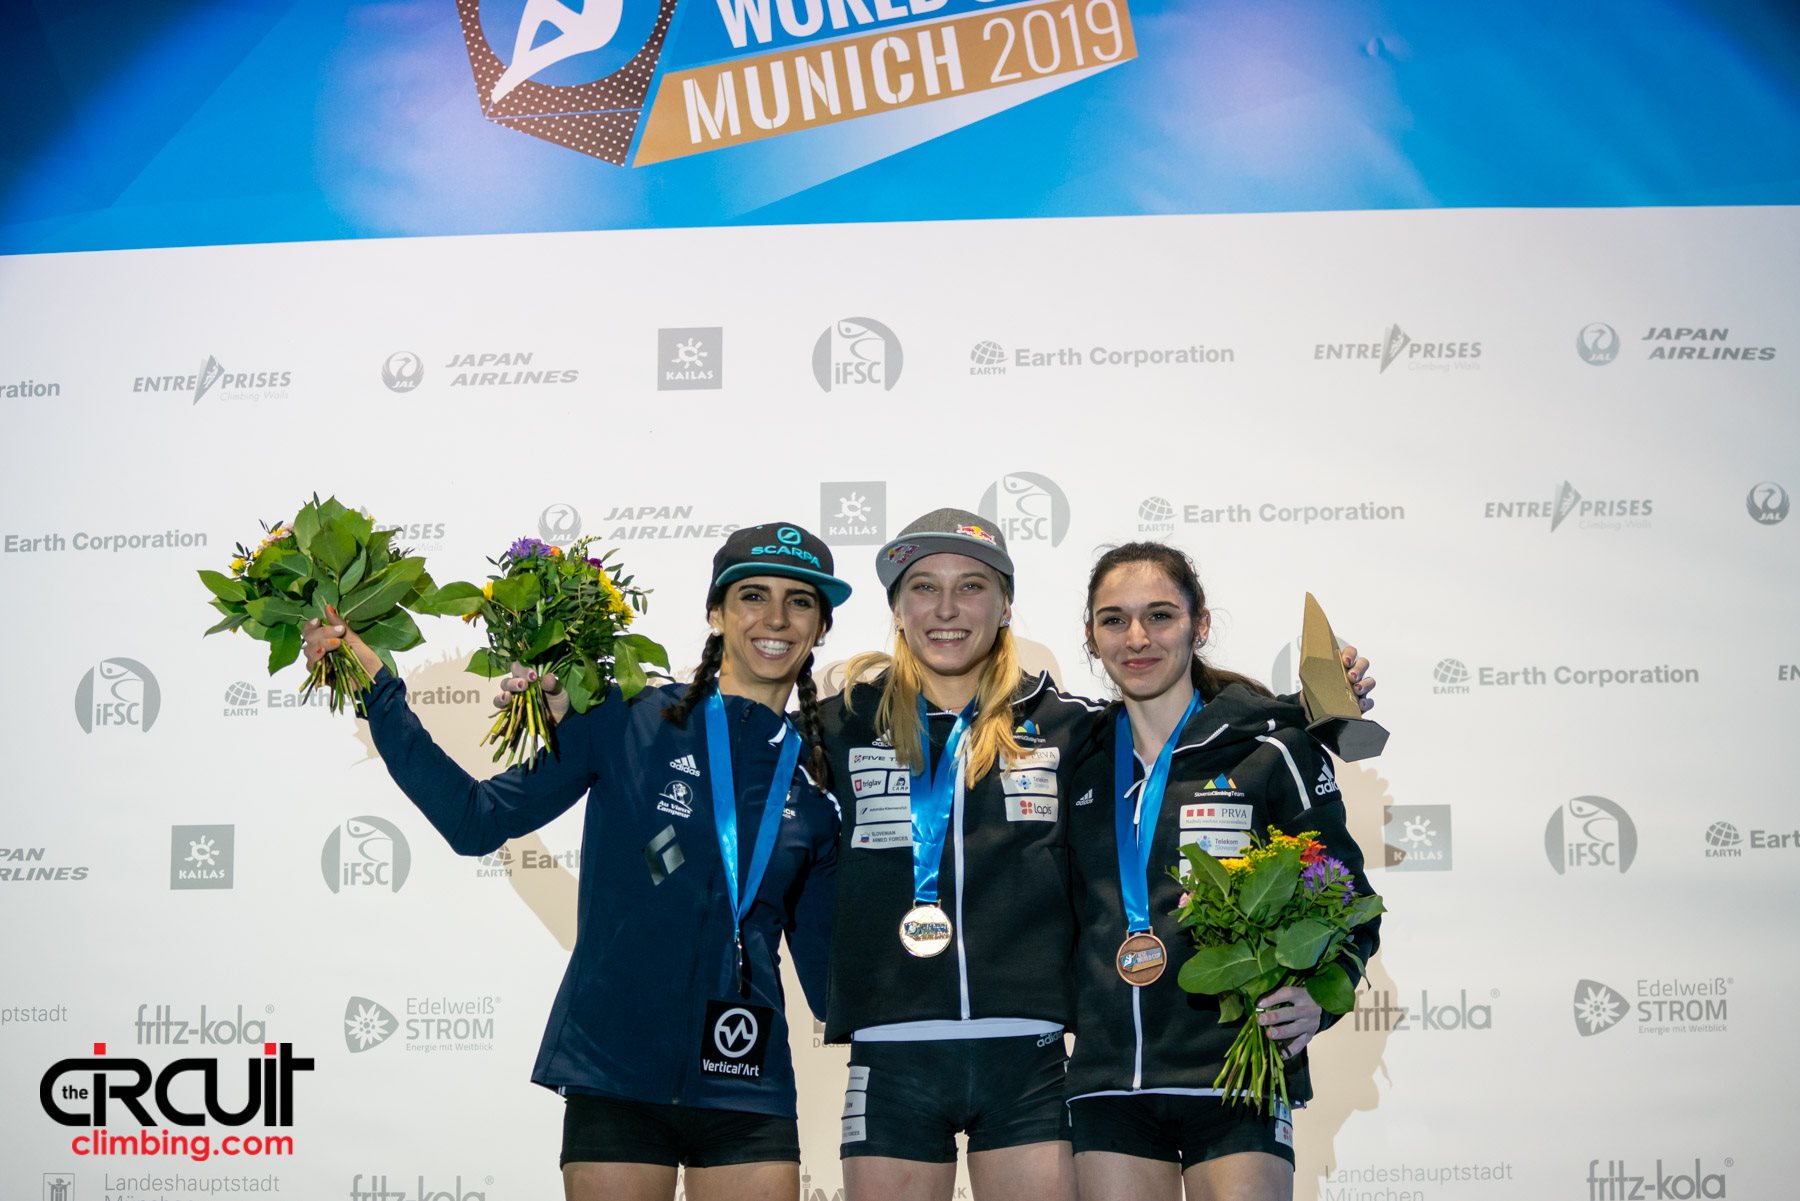 Left to right; Fanny Gibert, Janja Garnbret, Mia Krampl posing at the Bouldering World Cup 2019